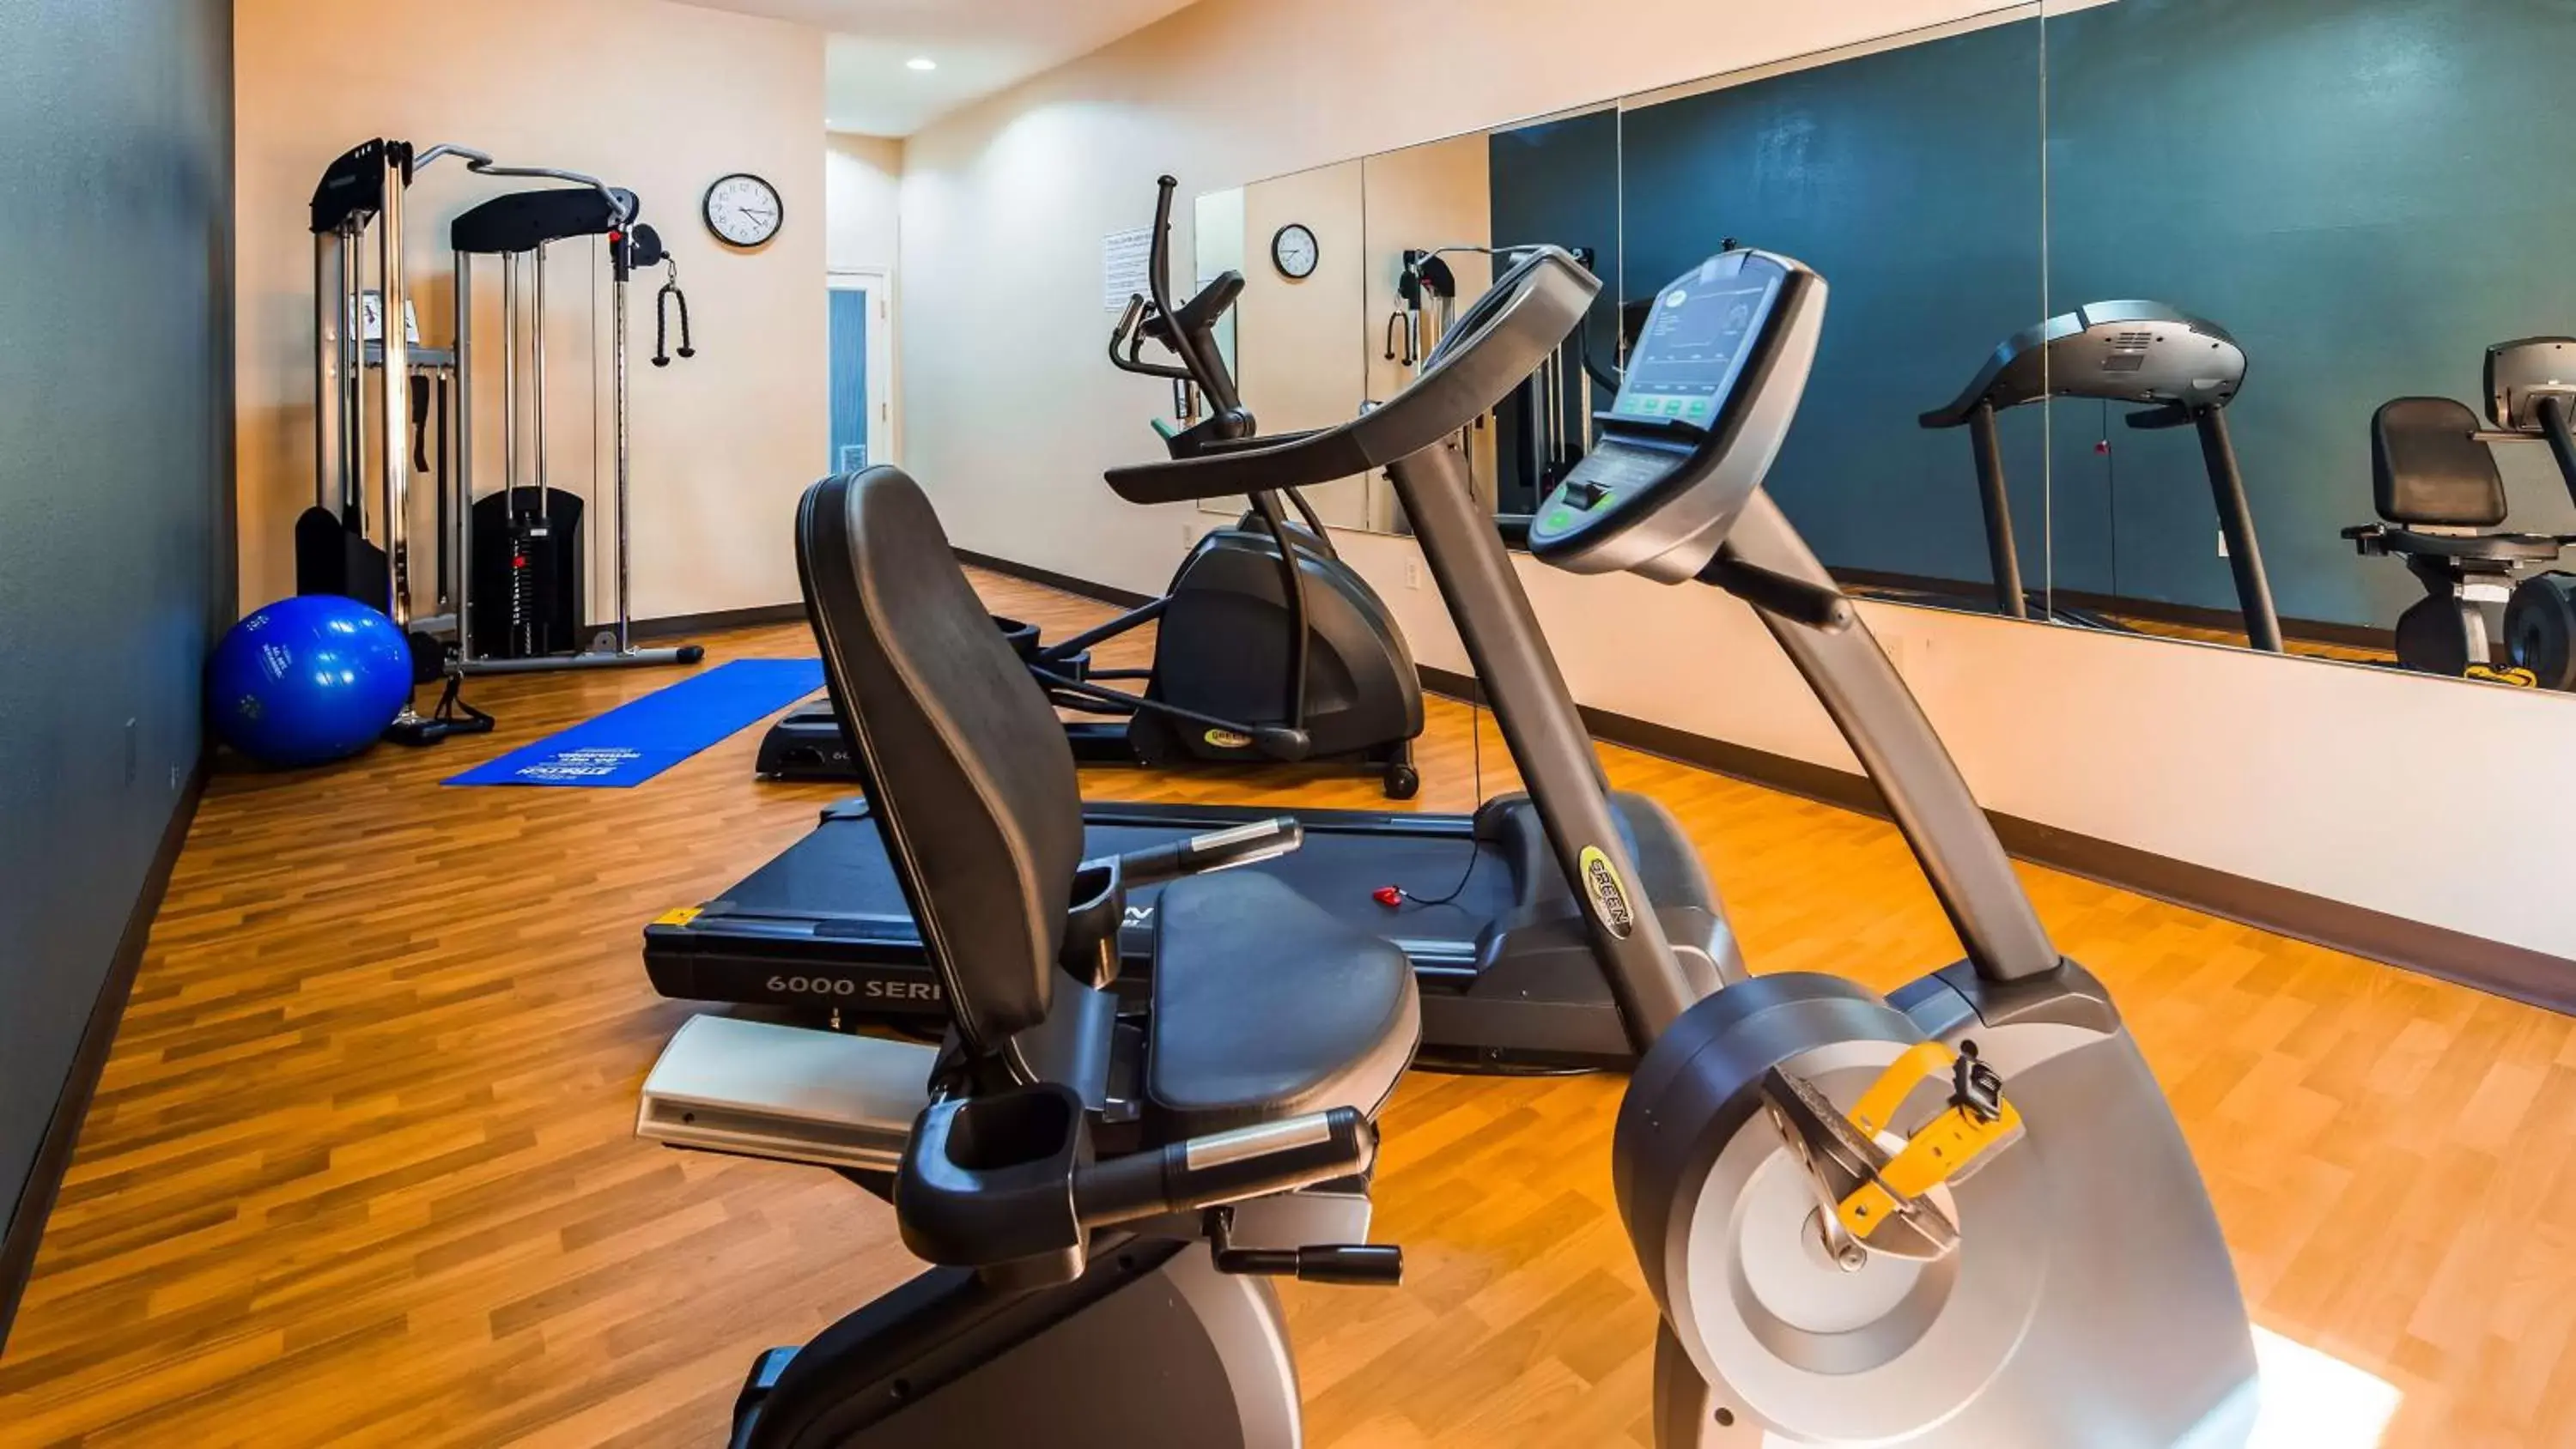 Fitness centre/facilities, Fitness Center/Facilities in Best Western Bradbury Inn & Suites